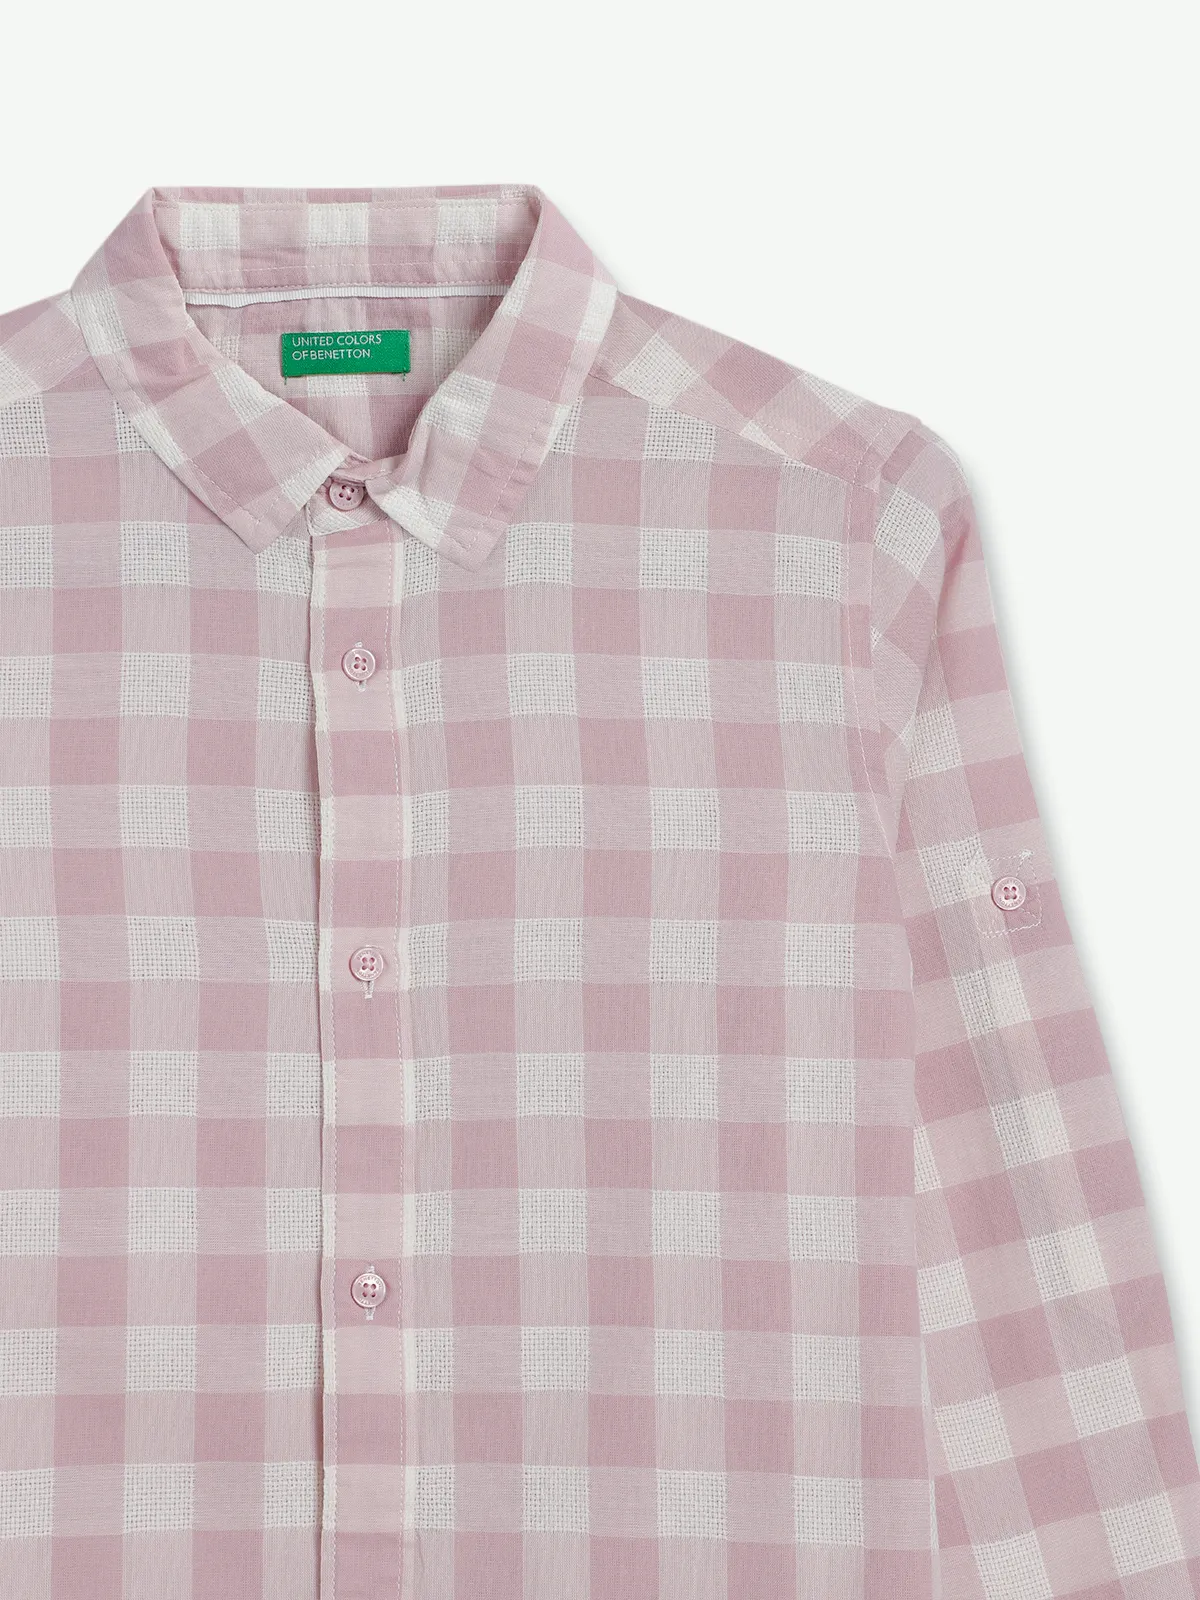 UCB onion pink checks cotton shirt